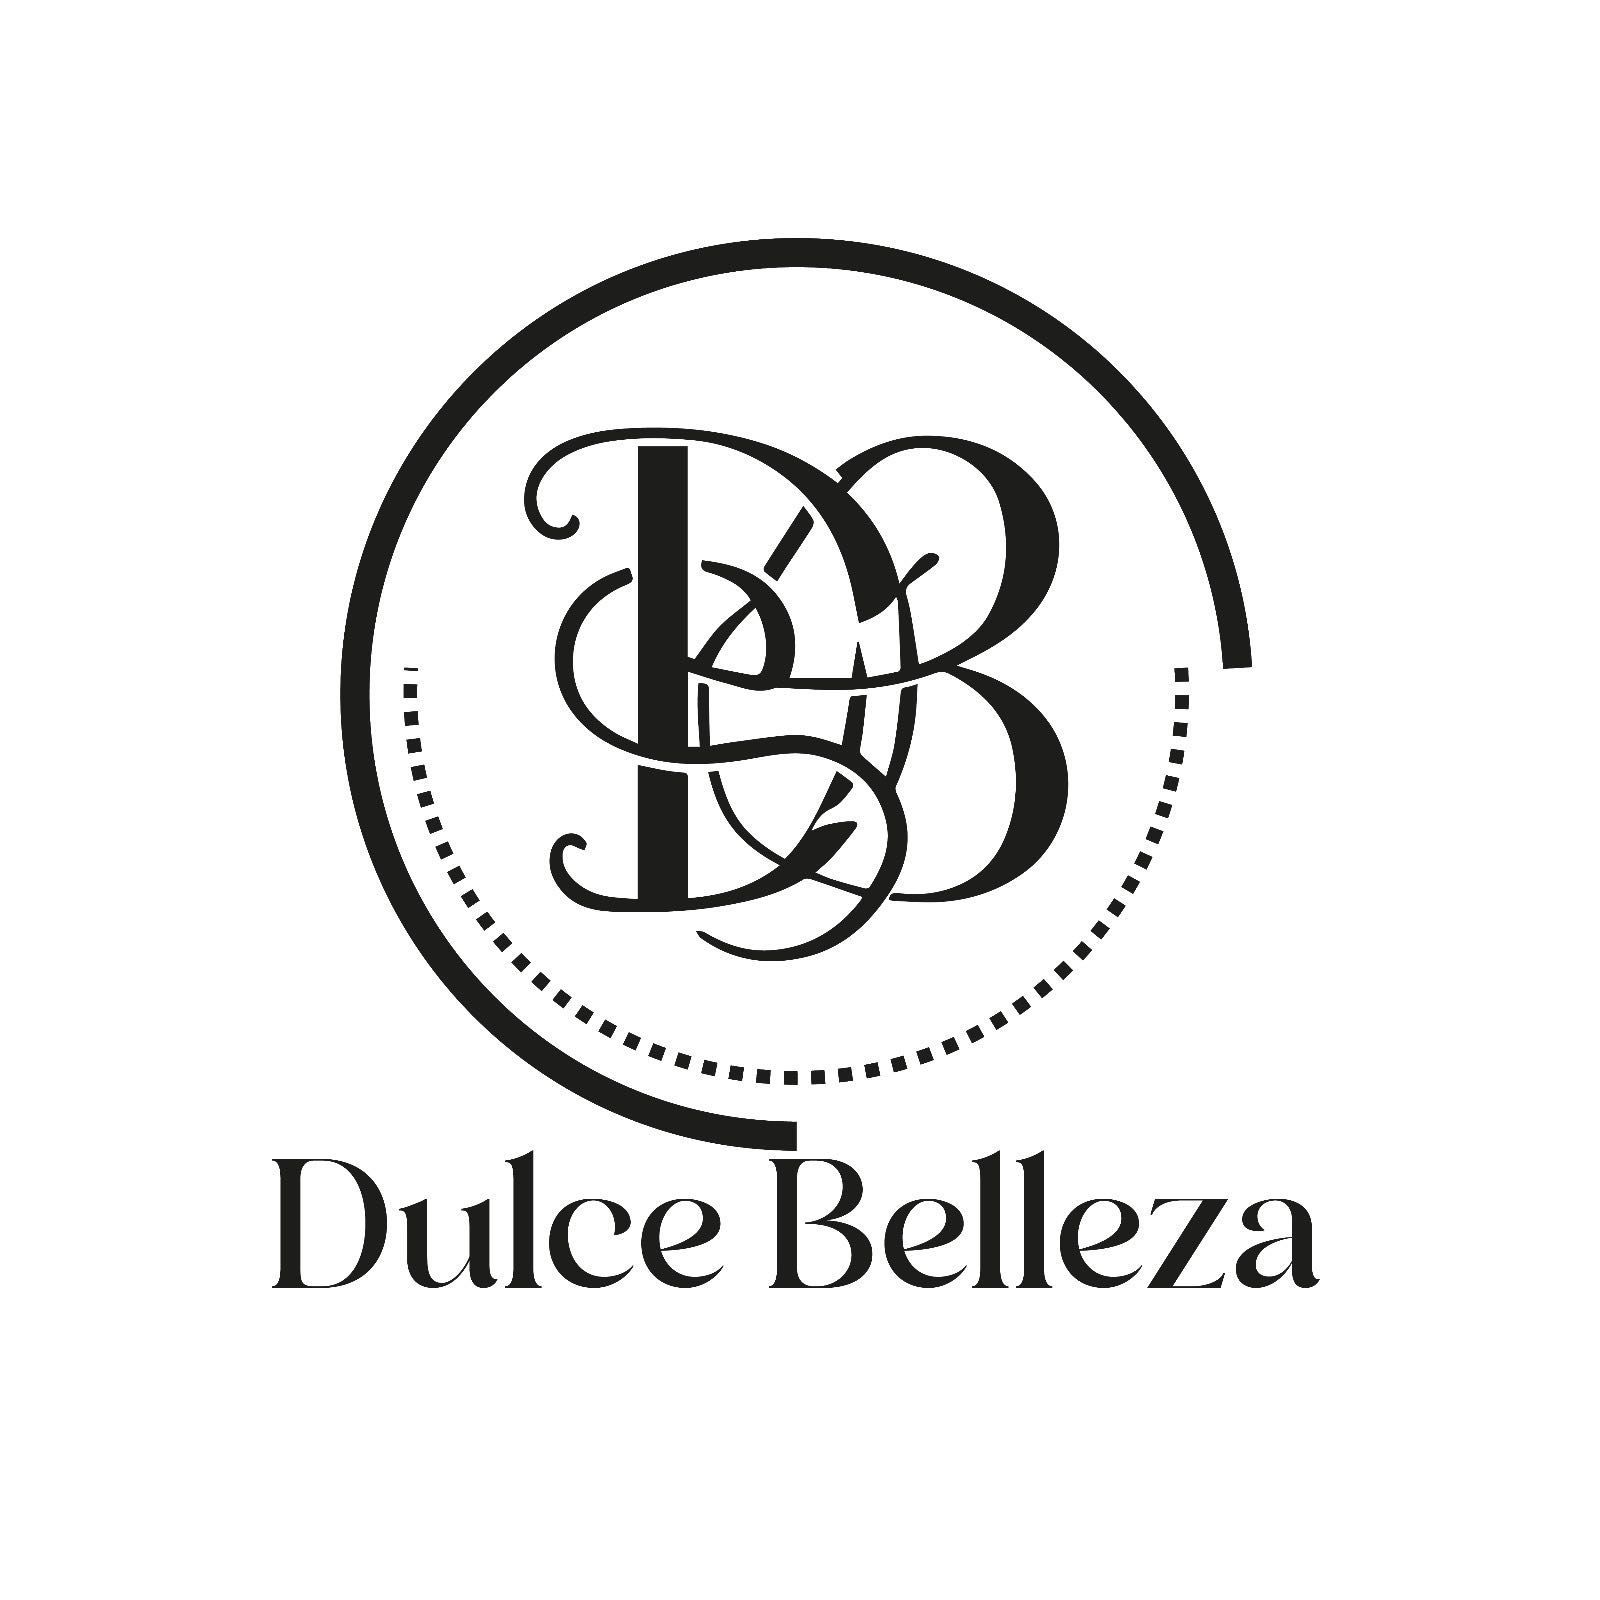 Dulce Belleza, Avenida de Illice, 91, 03320, Elche